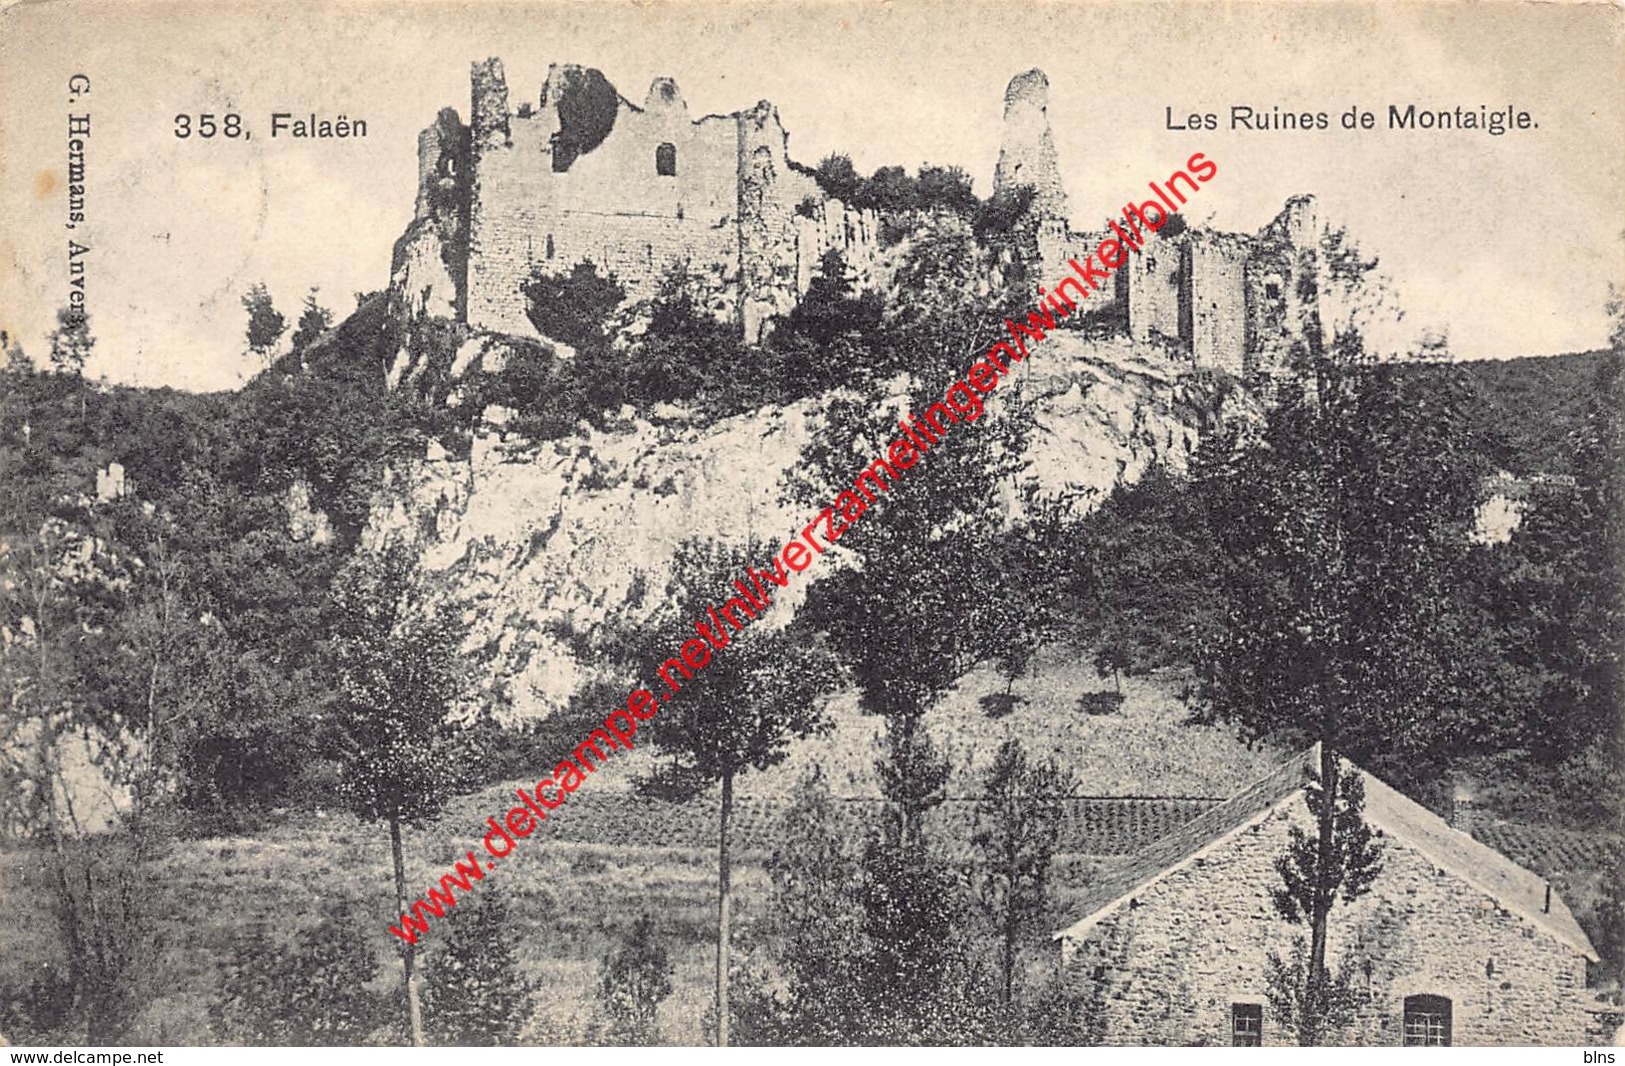 Les Ruines De Montaigle - Falaen - Onhaye